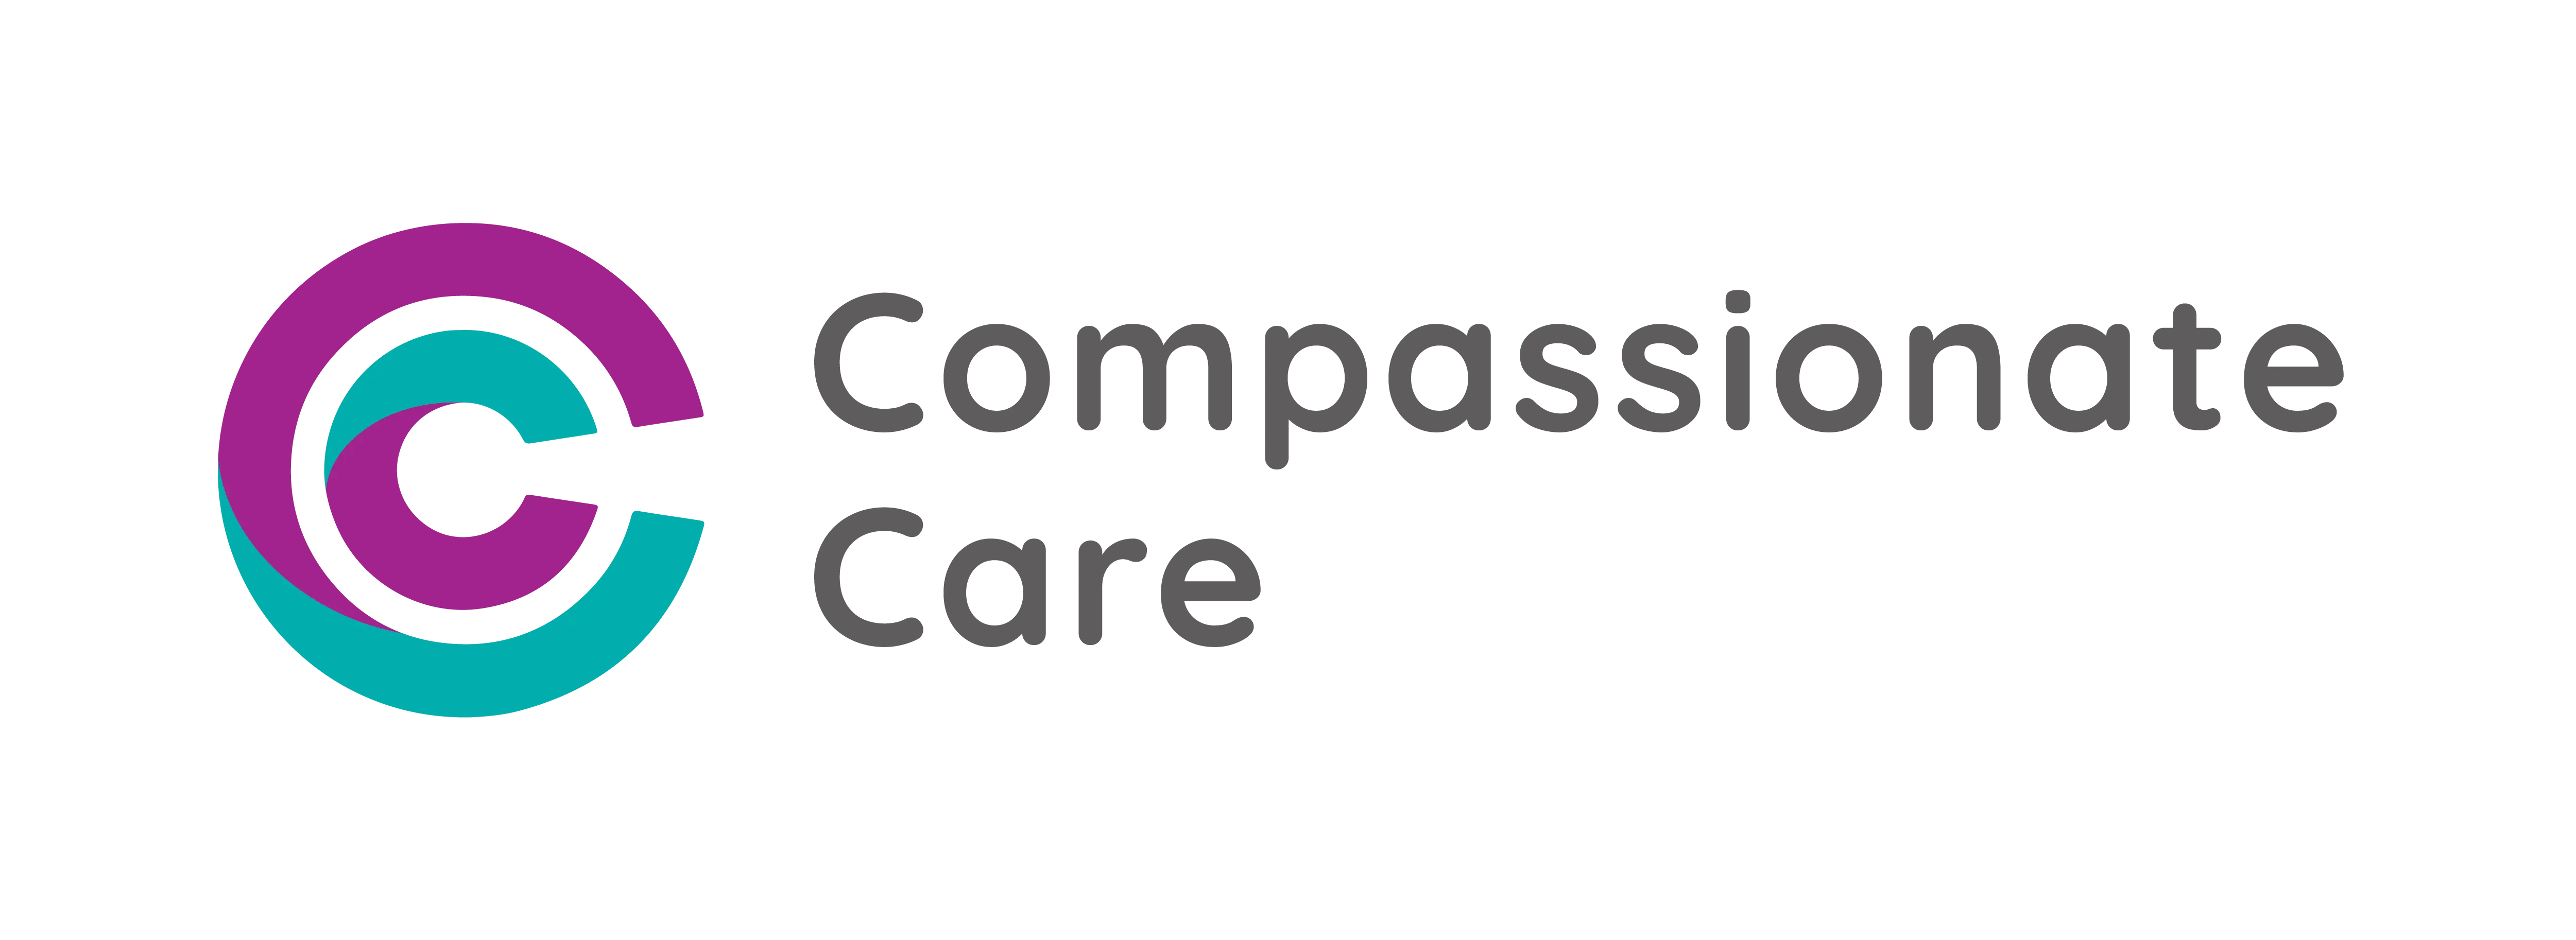 compassionate care logo